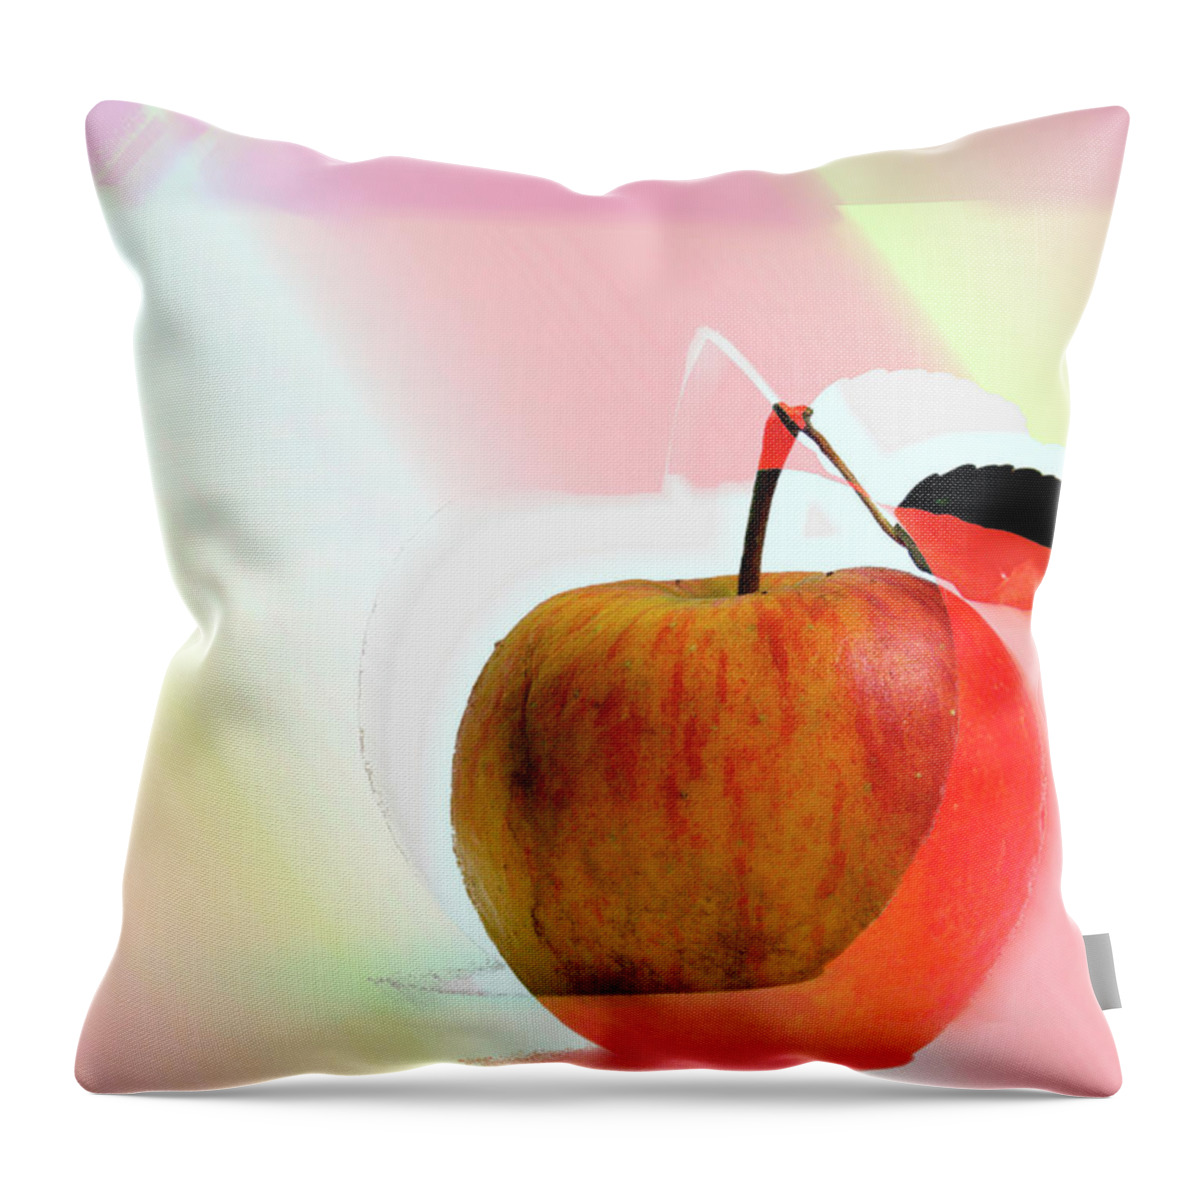 Apple Throw Pillow featuring the photograph Apple peel by Luc Van de Steeg